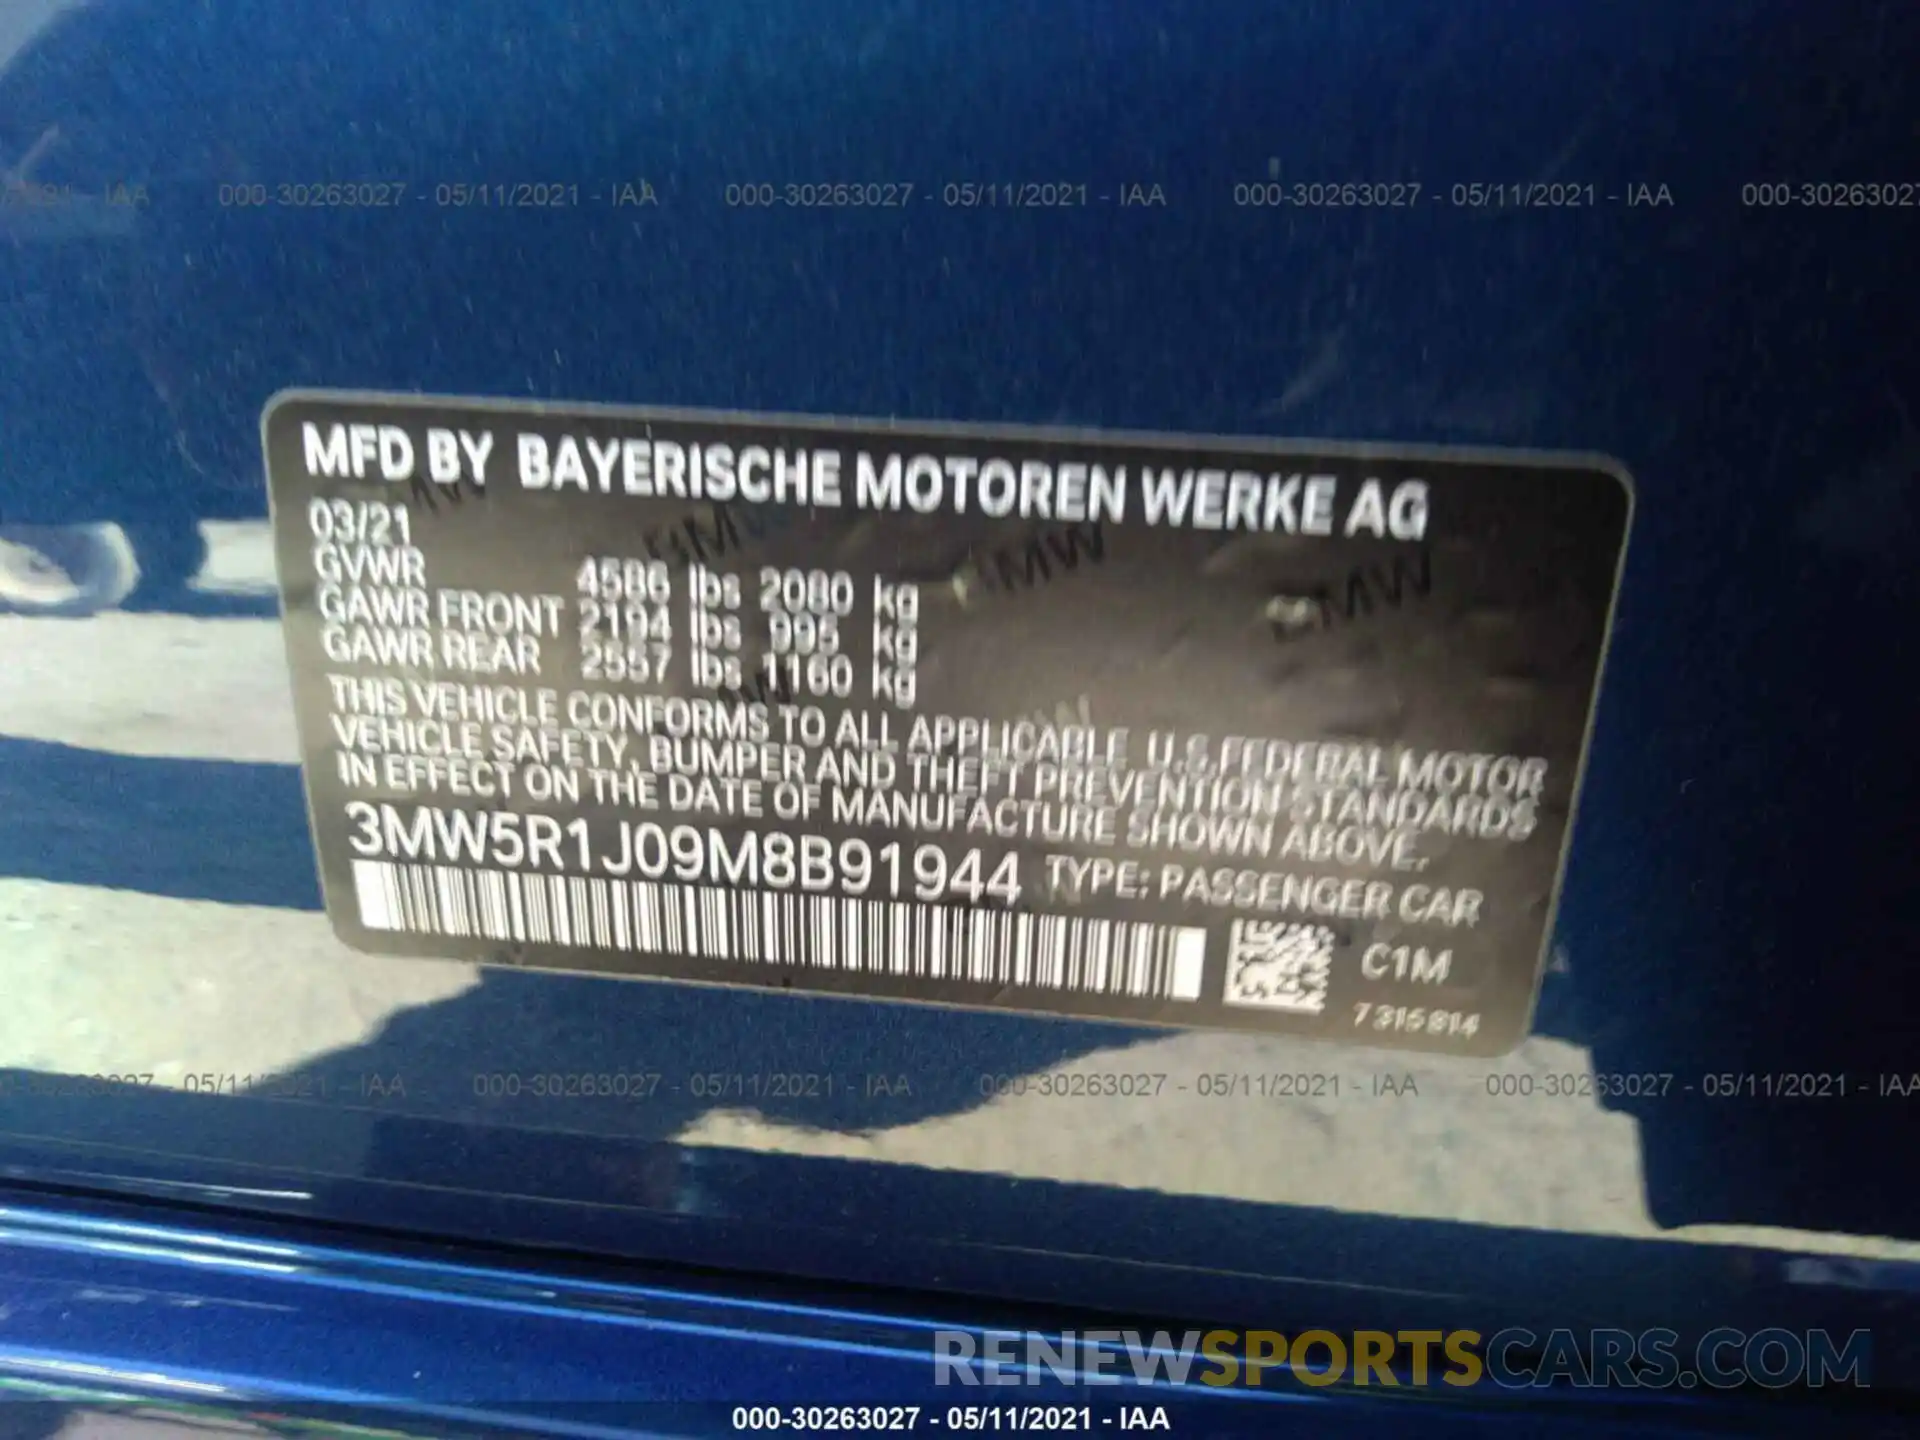 9 Photograph of a damaged car 3MW5R1J09M8B91944 BMW 3 SERIES 2021